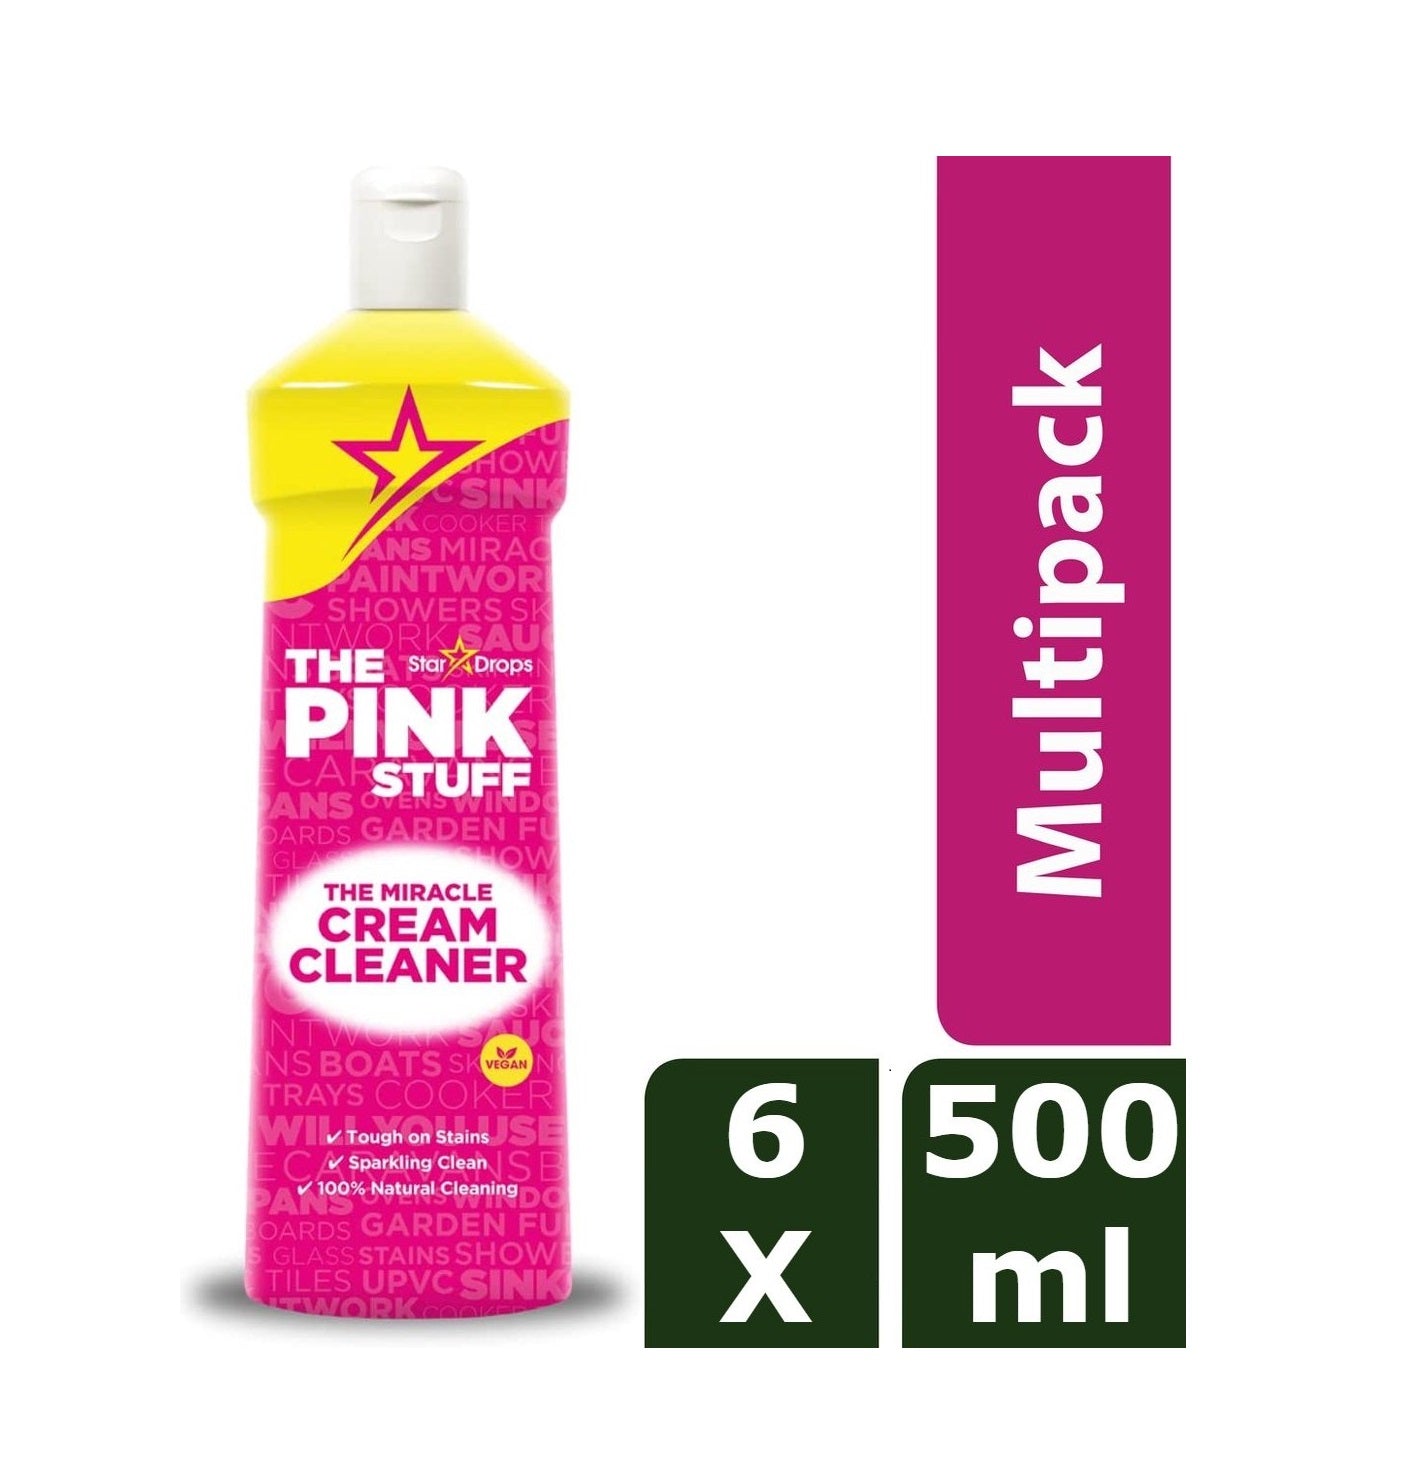 The Pink Stuff Abrasive Creme - 6 x 500 ml economy pack - Environmentally Friendly